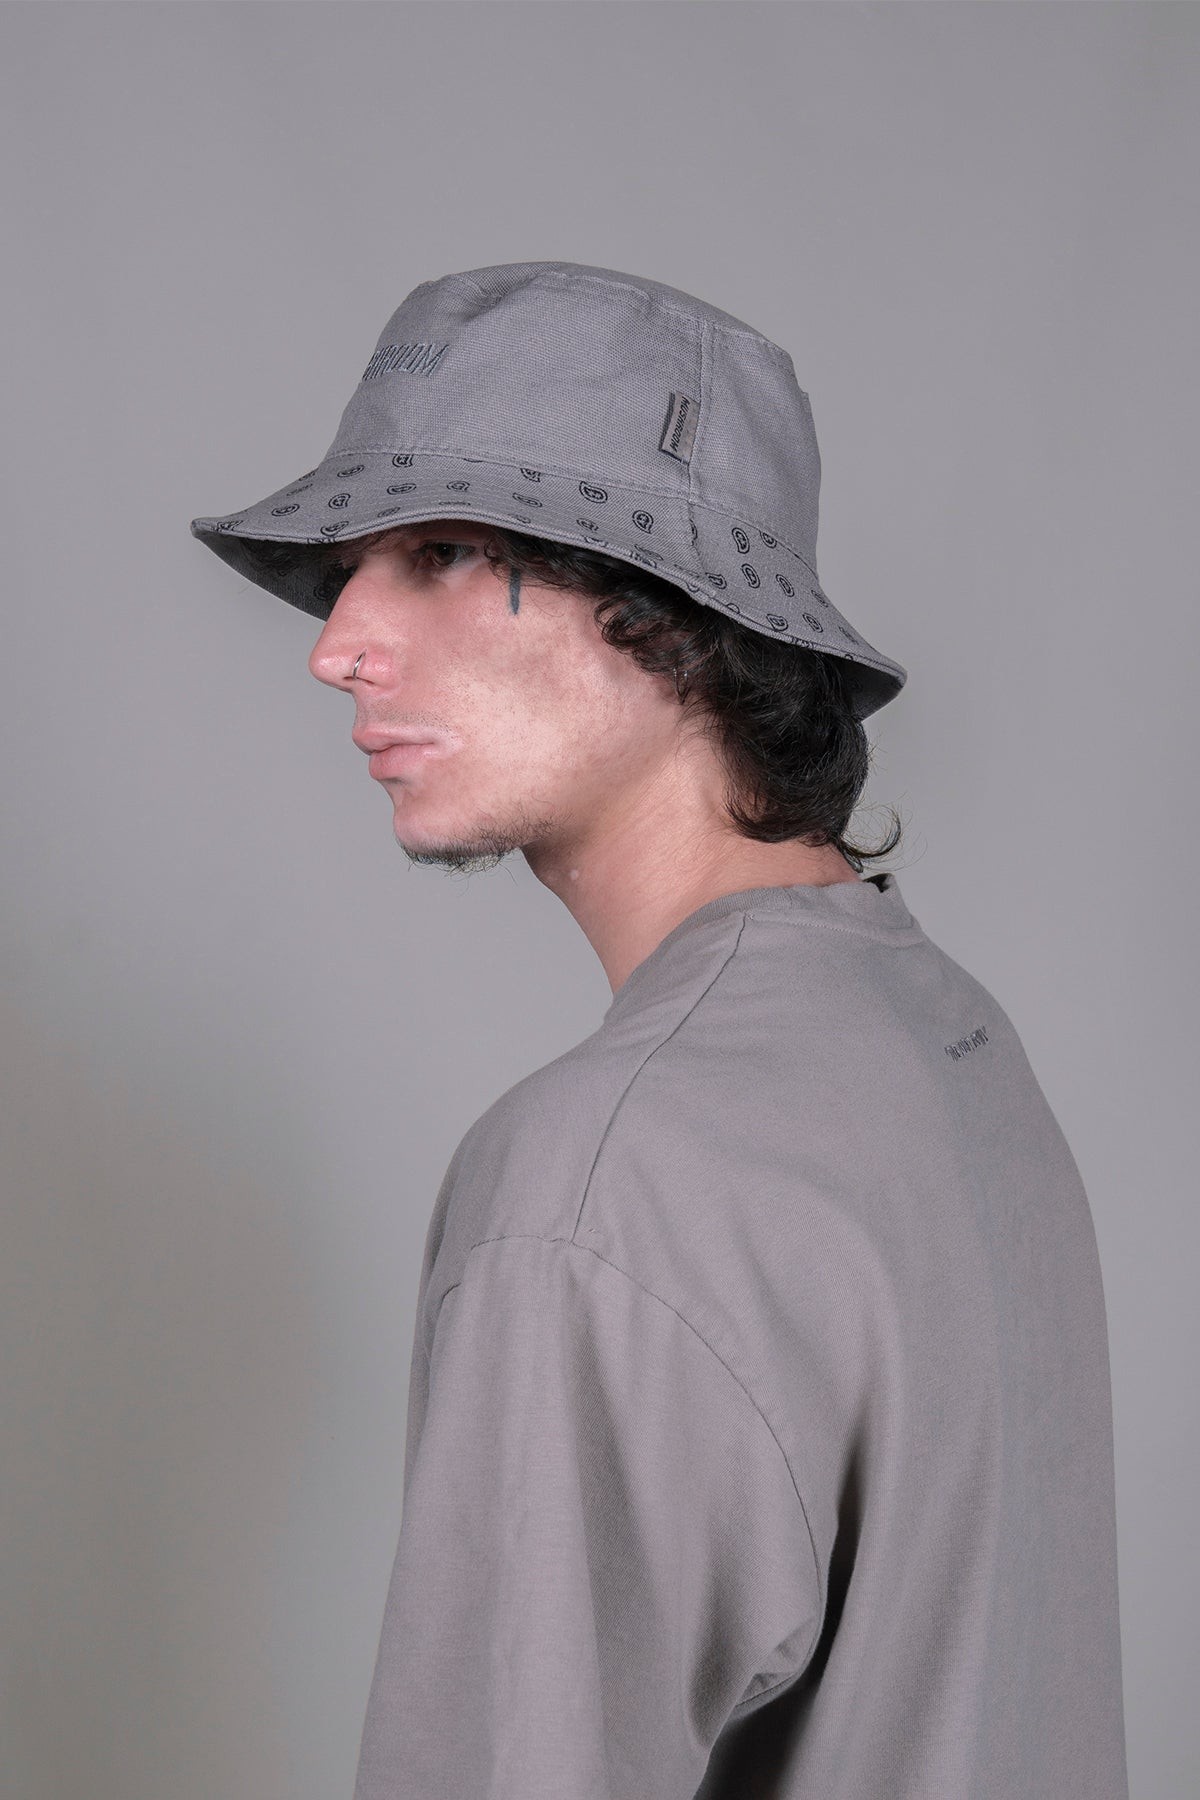 Mushroom ''The Dust Bowl'' Grey Bucket Hat